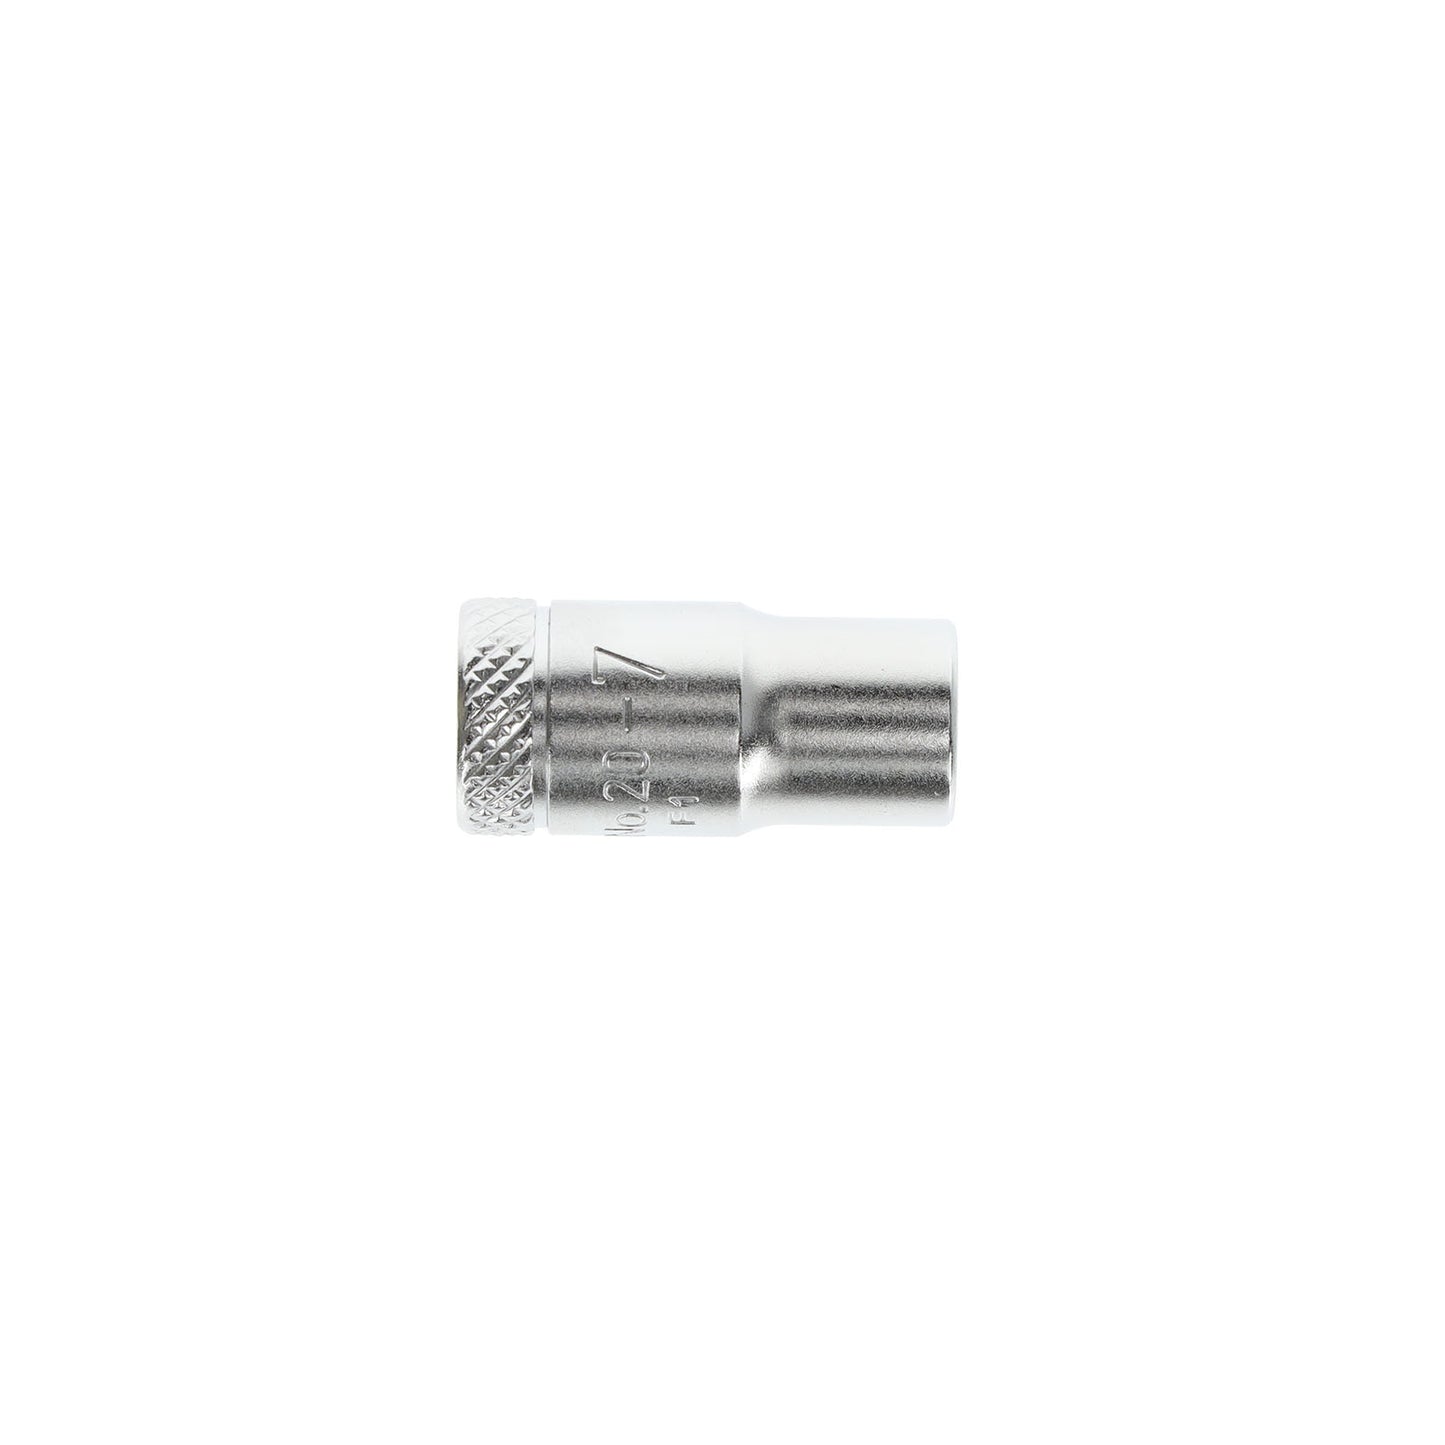 GEDORE 20 7 - Hexagonal Socket 1/4", 7 mm (6165910)